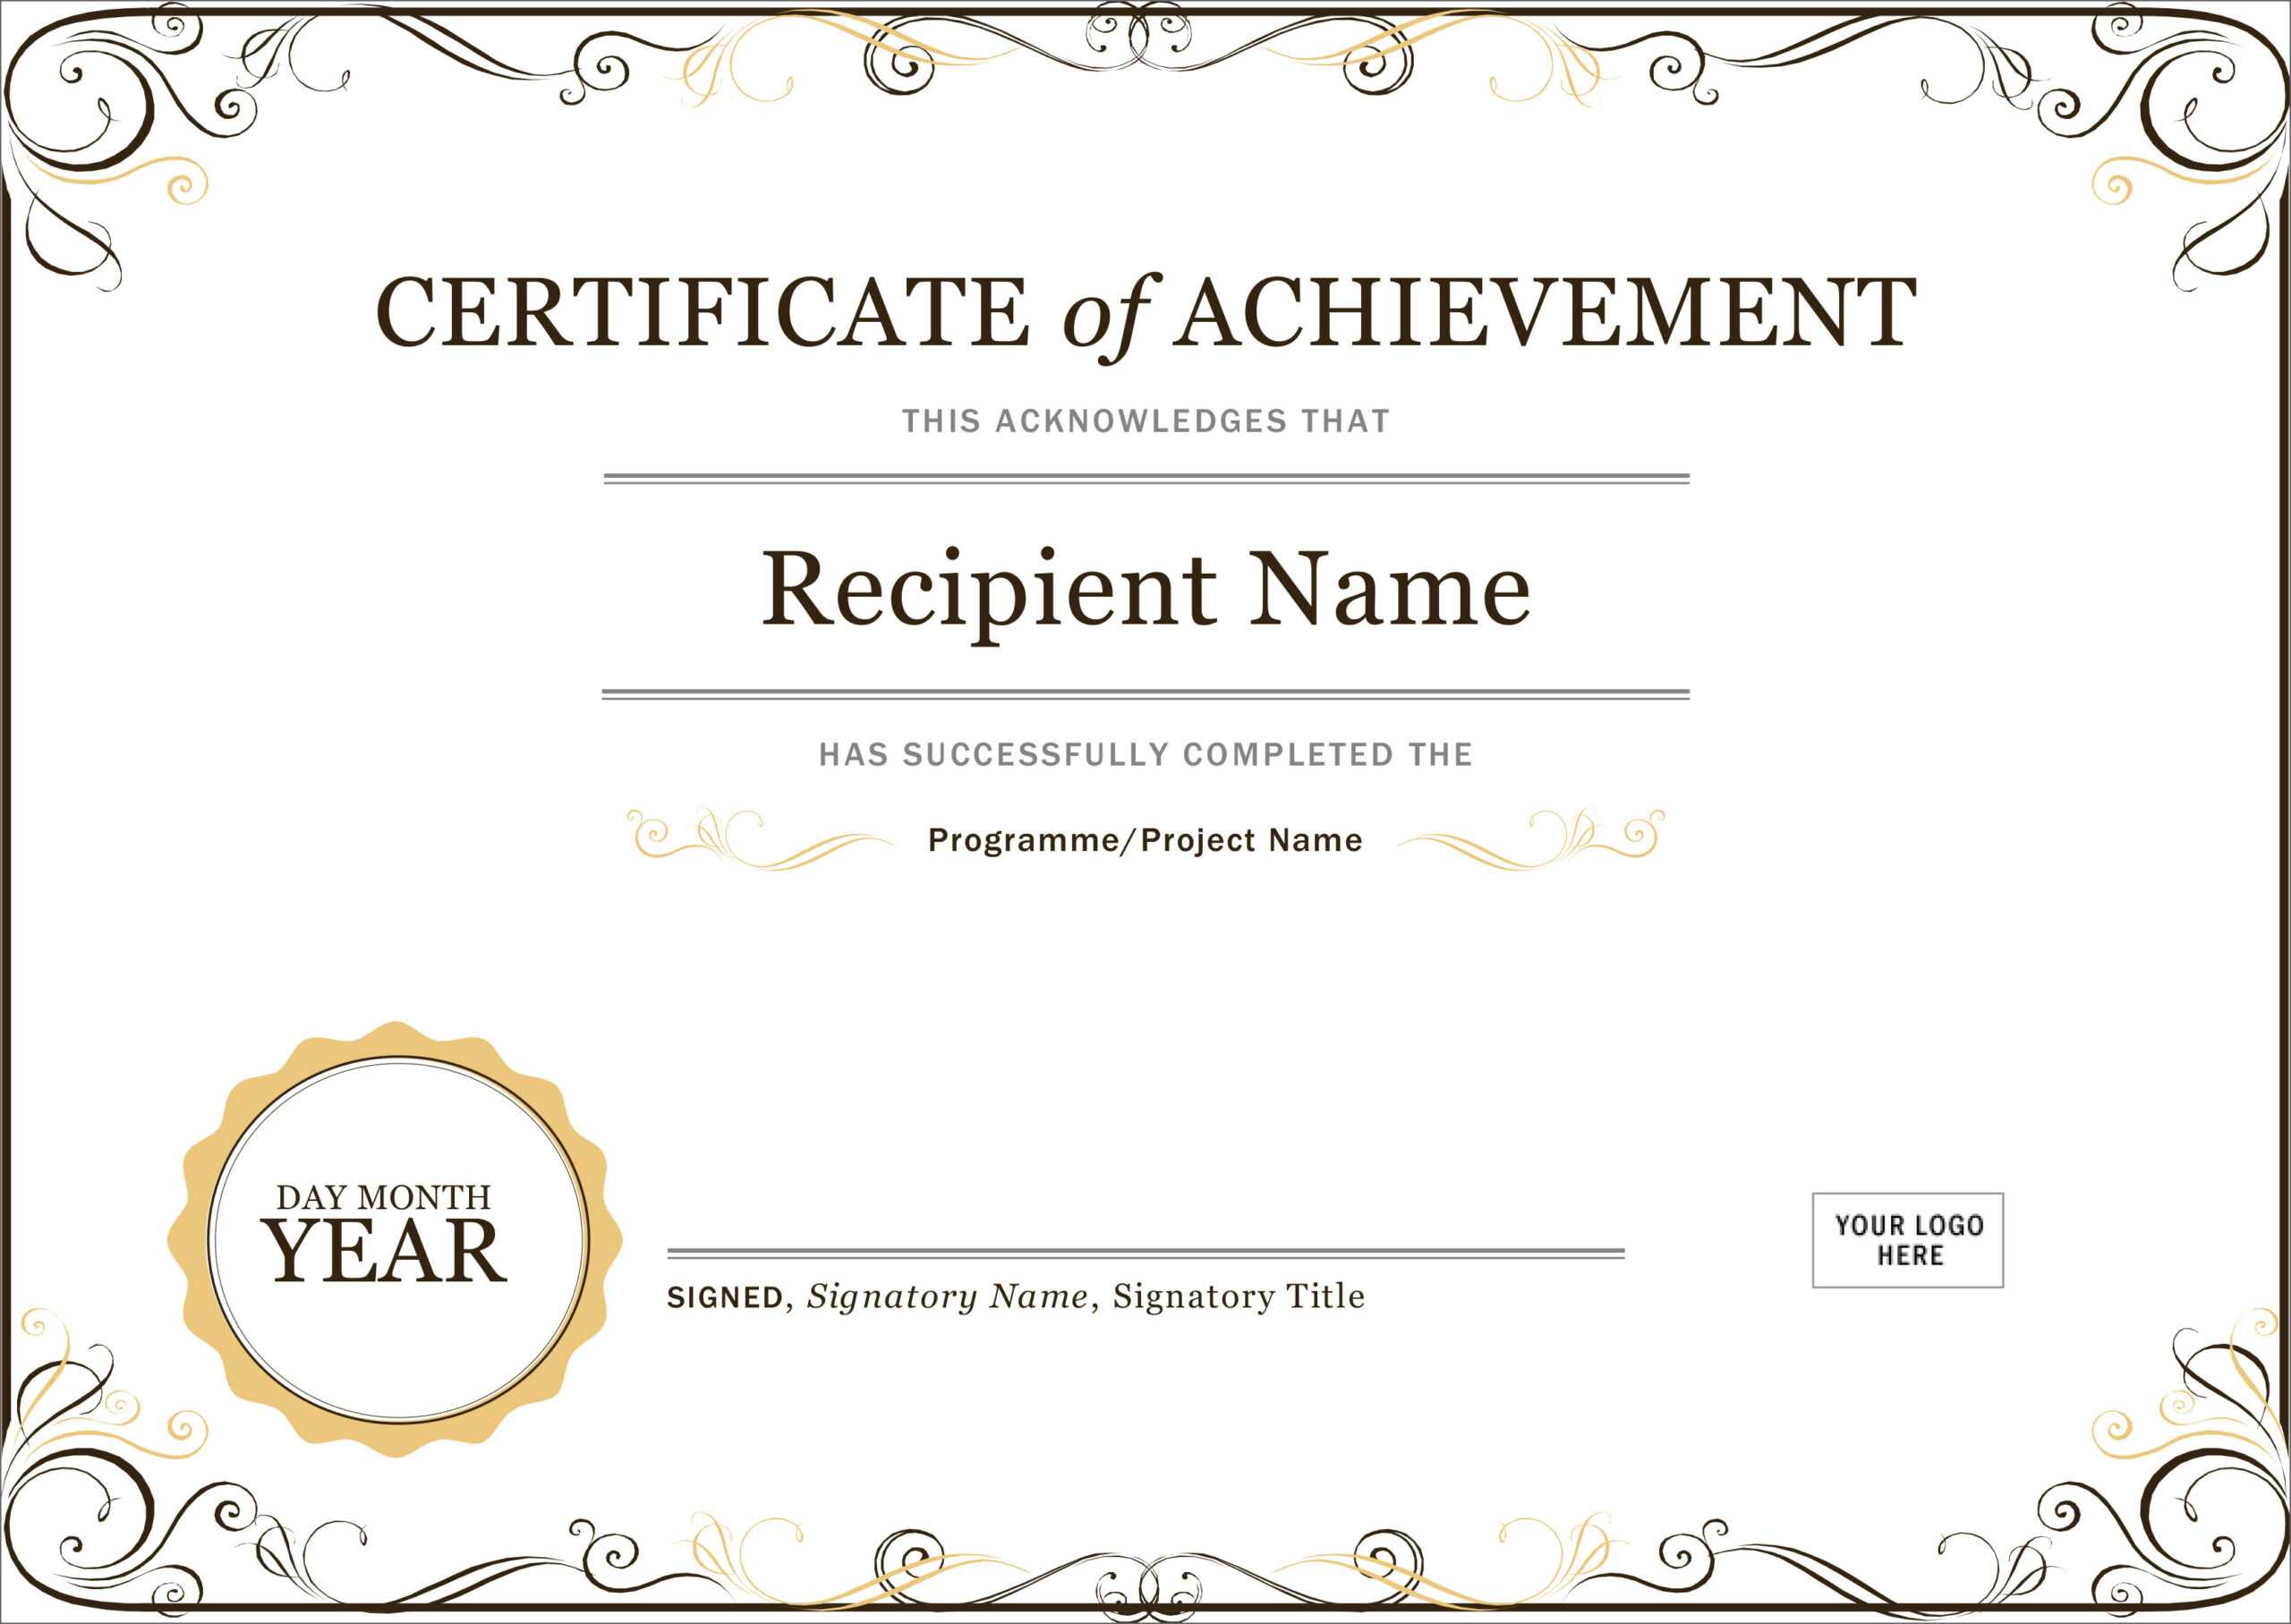 50 Free Creative Blank Certificate Templates In Psd Regarding Blank Certificate Of Achievement Template